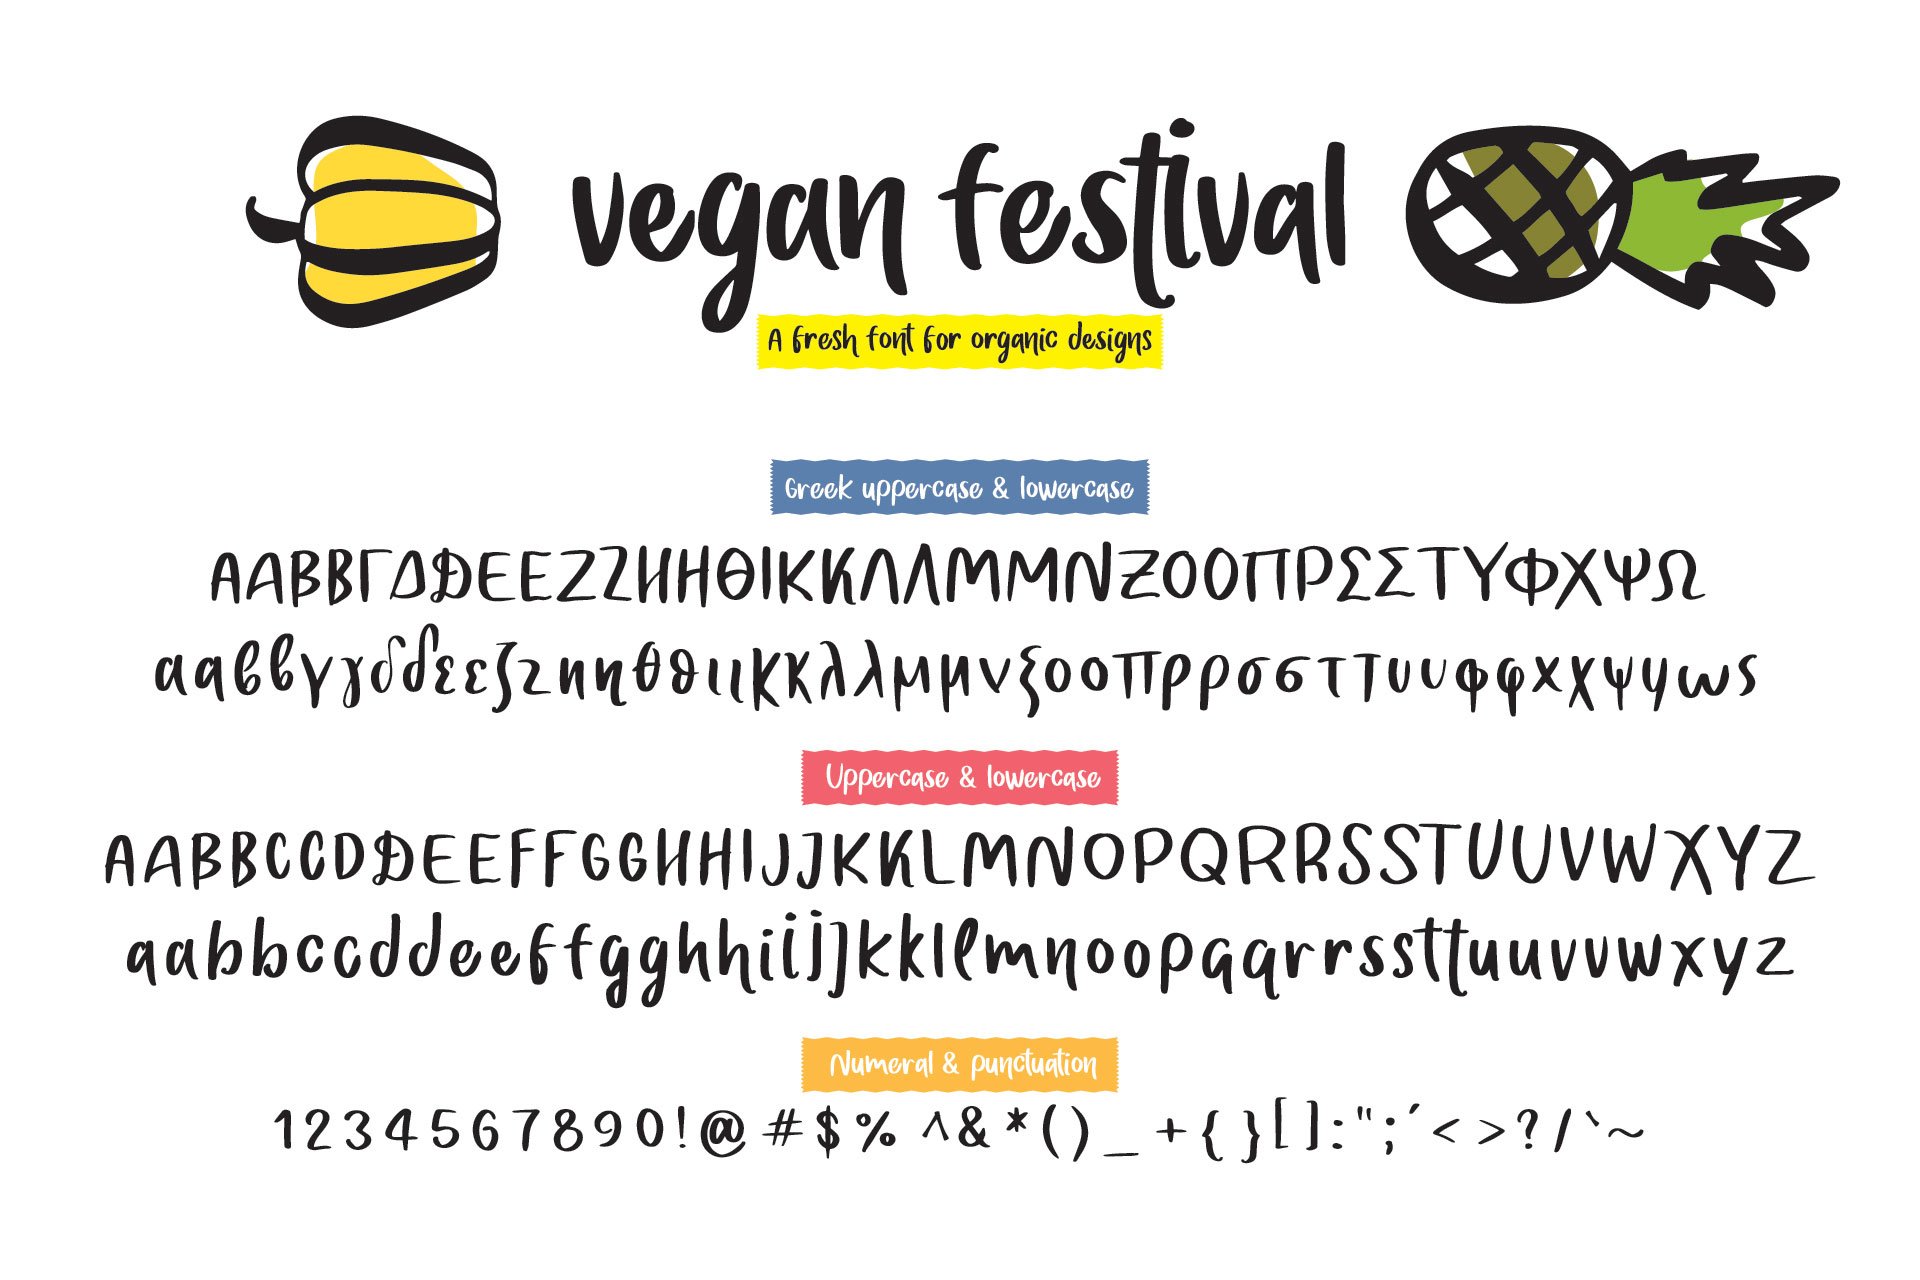 gb vegan festival greek font 08 607